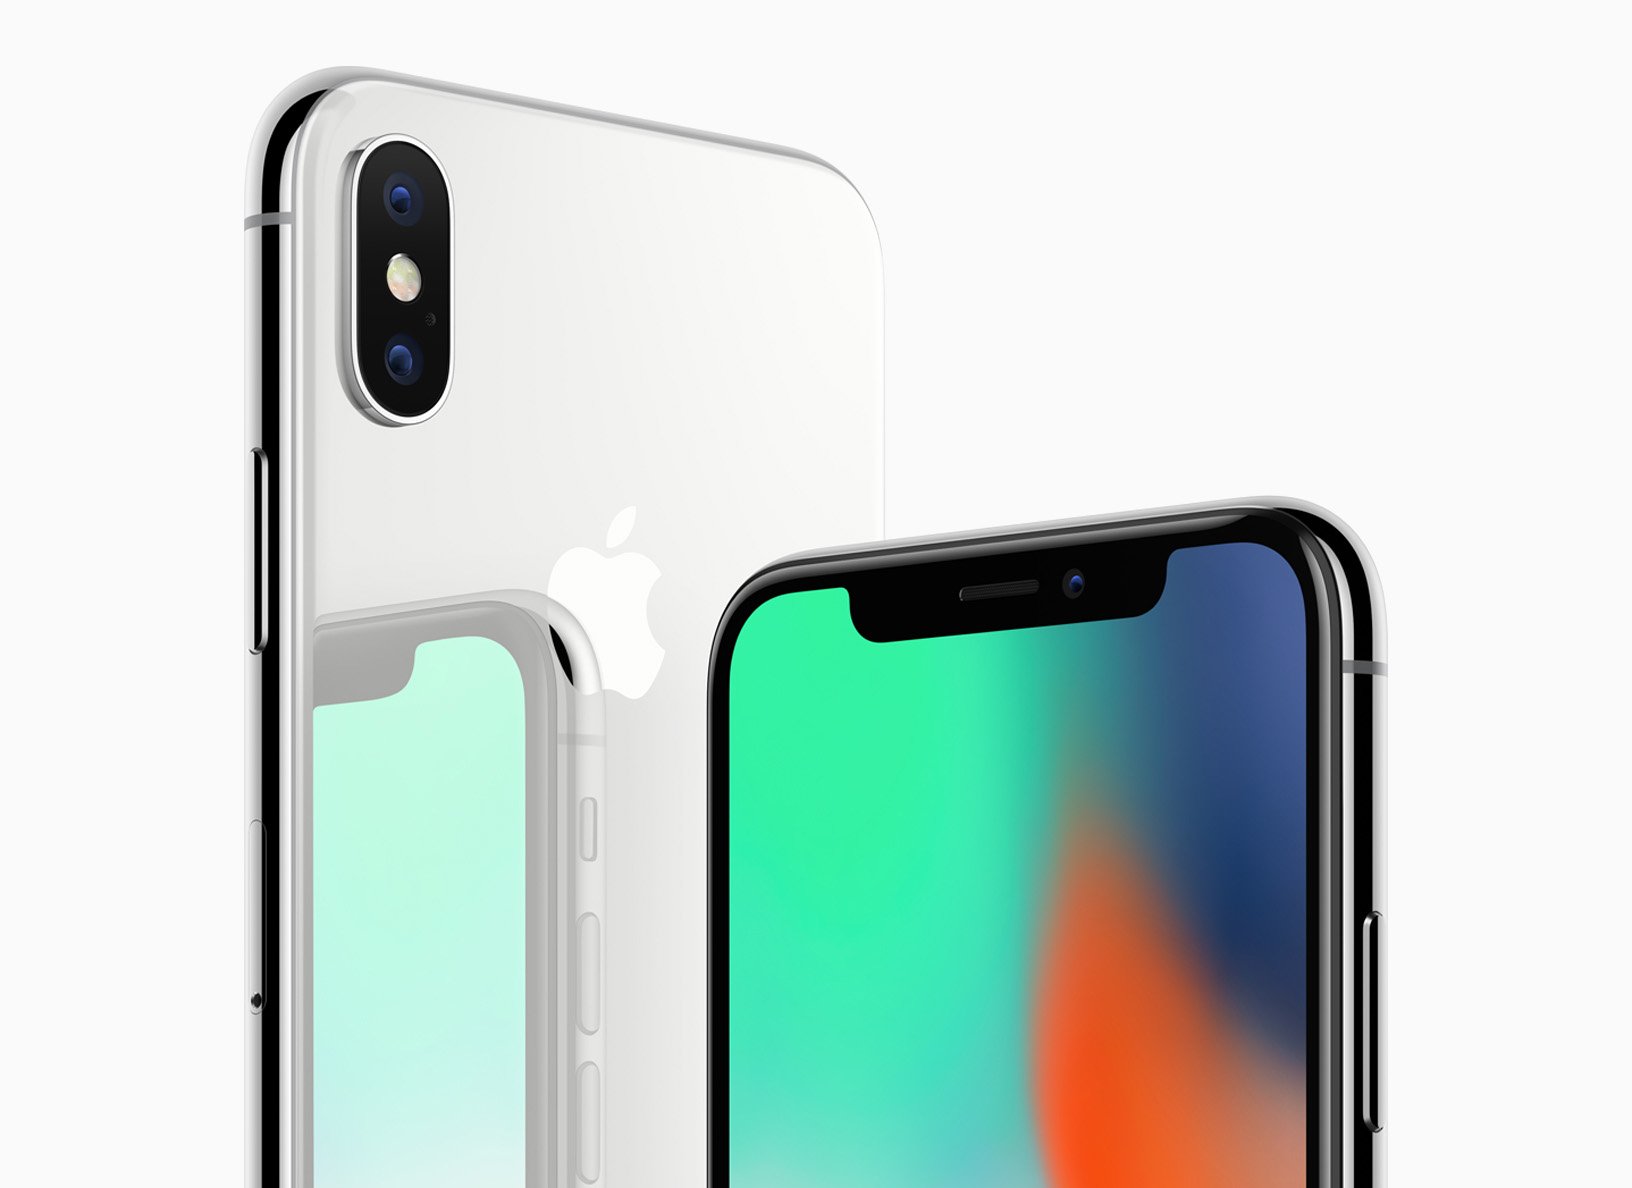 Exclusivo Iphone Xs Iphone Xs Plus Y Iphone 9 De Apple 2018 Detallados